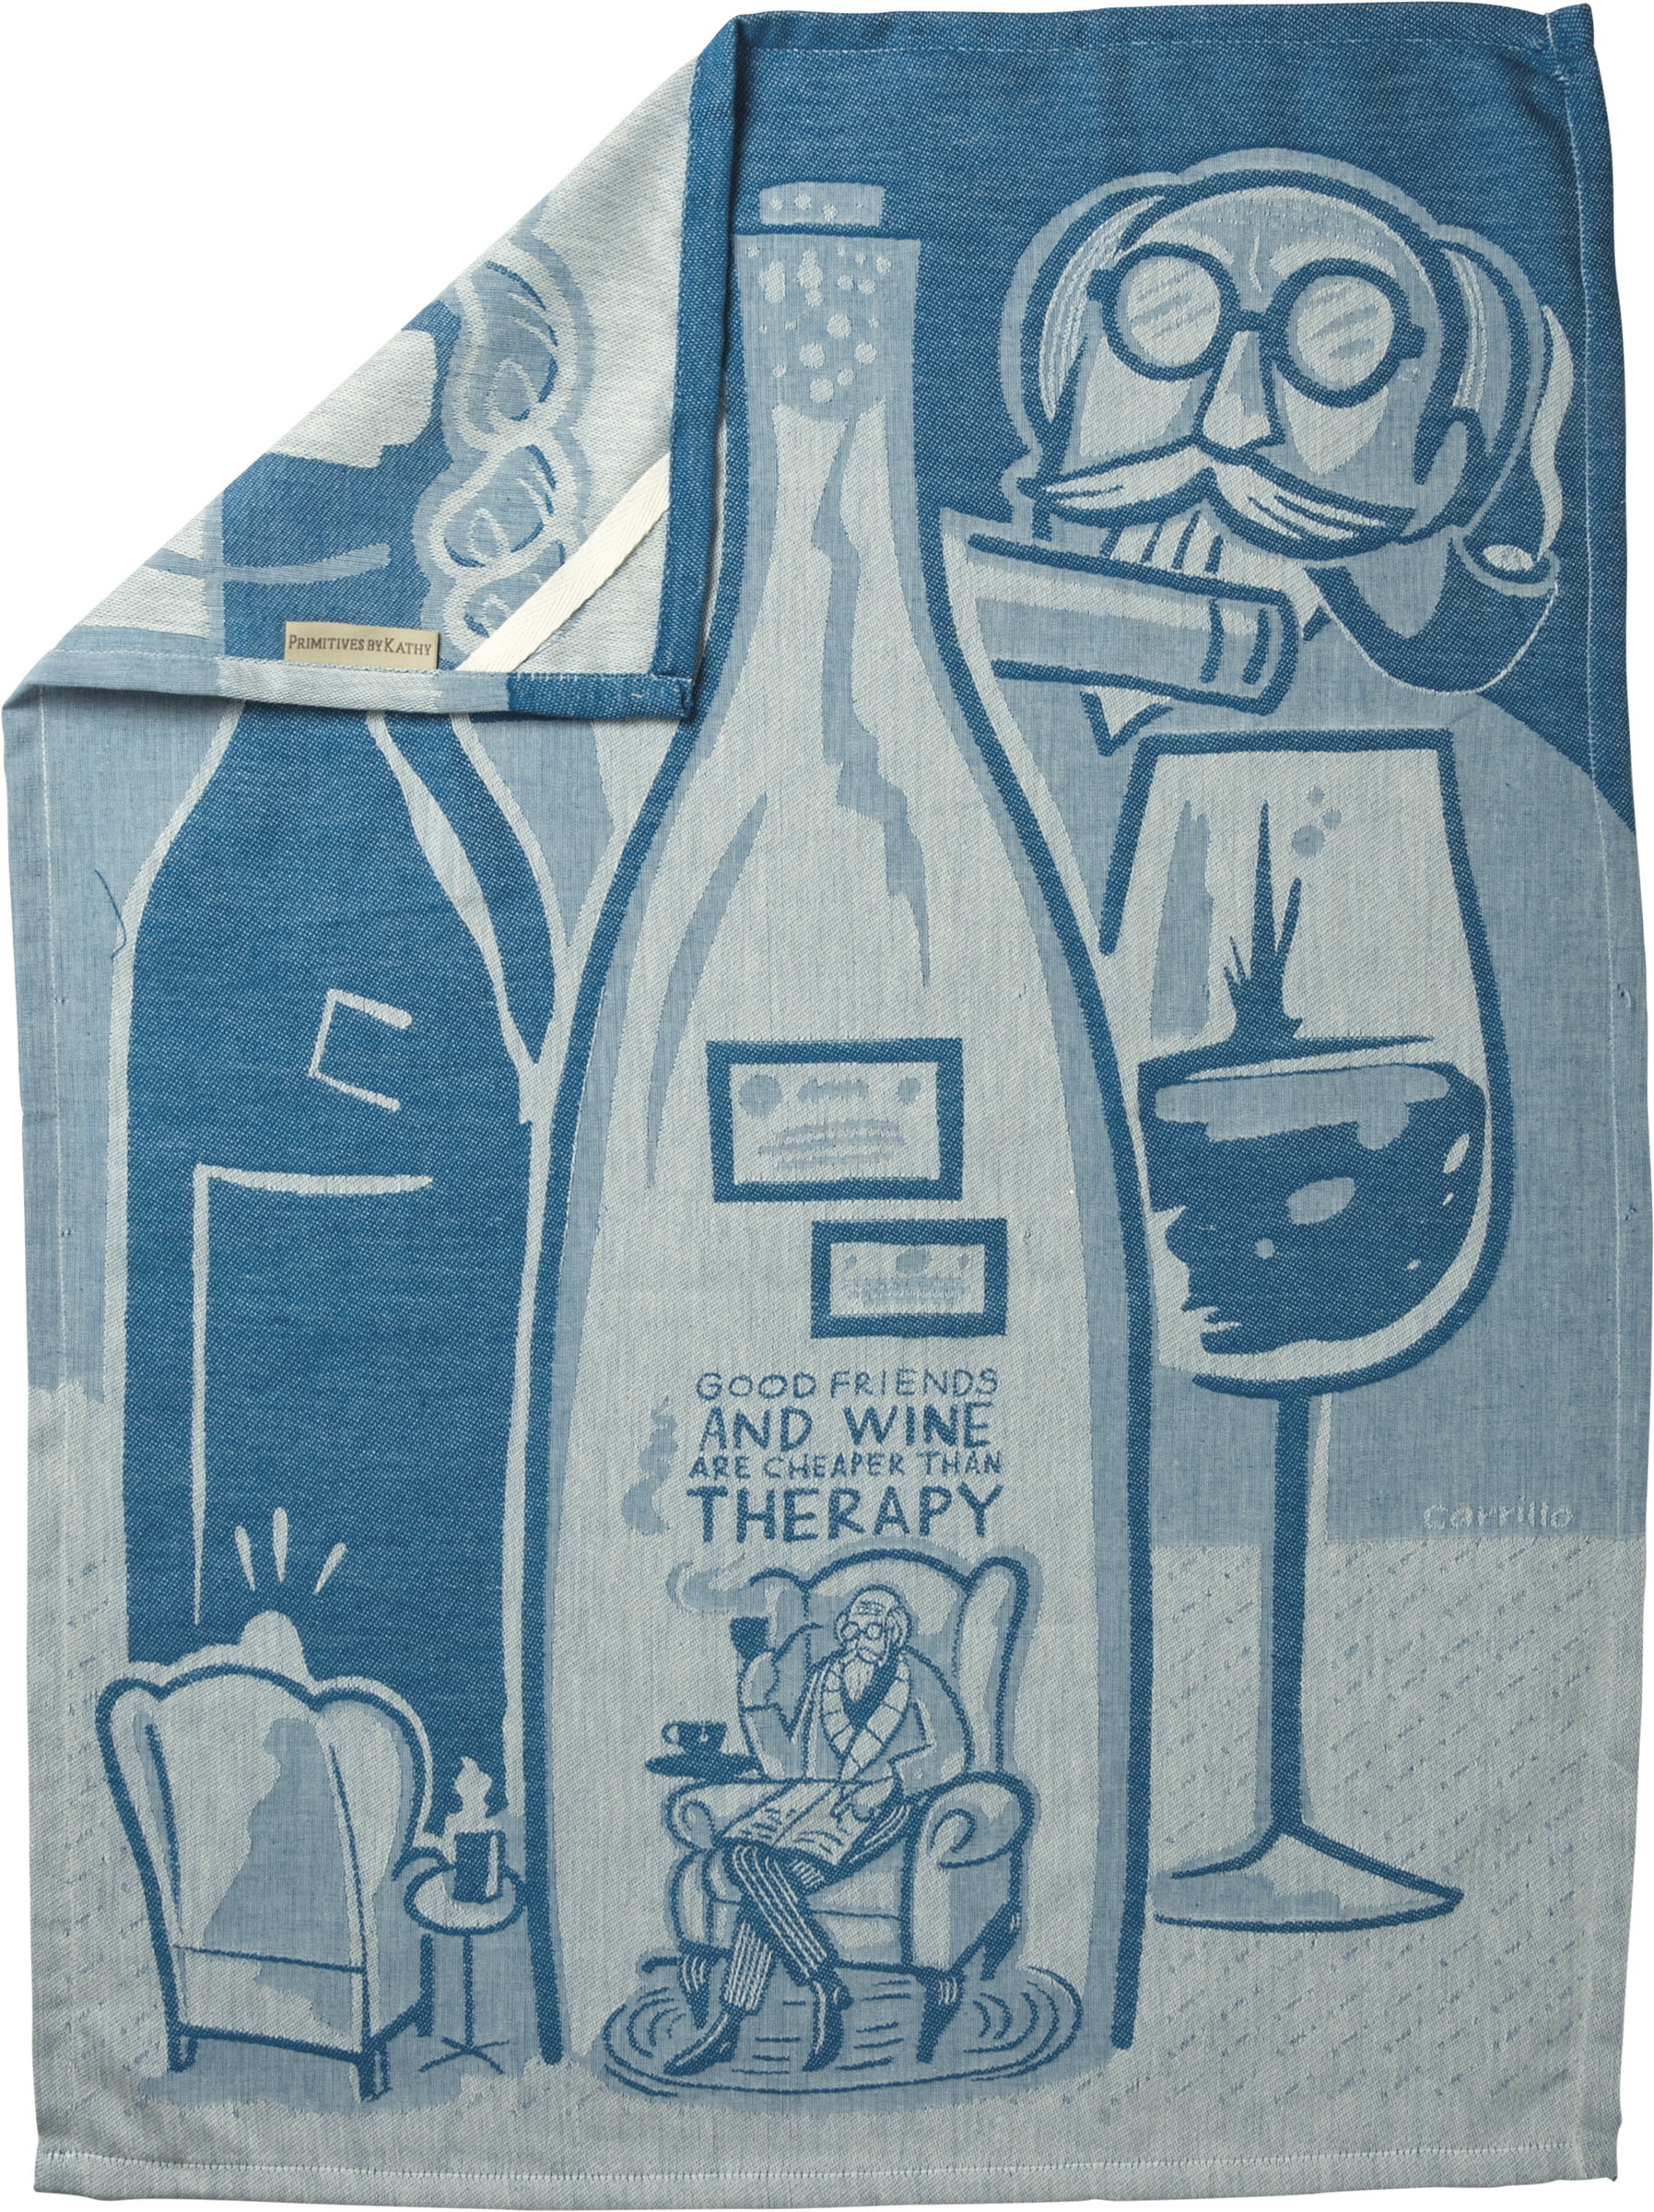 Details about   Primitives By Kathy Cotton Jacquard Blue Dish Towel ~ Friends Wine Cheap Therapy 